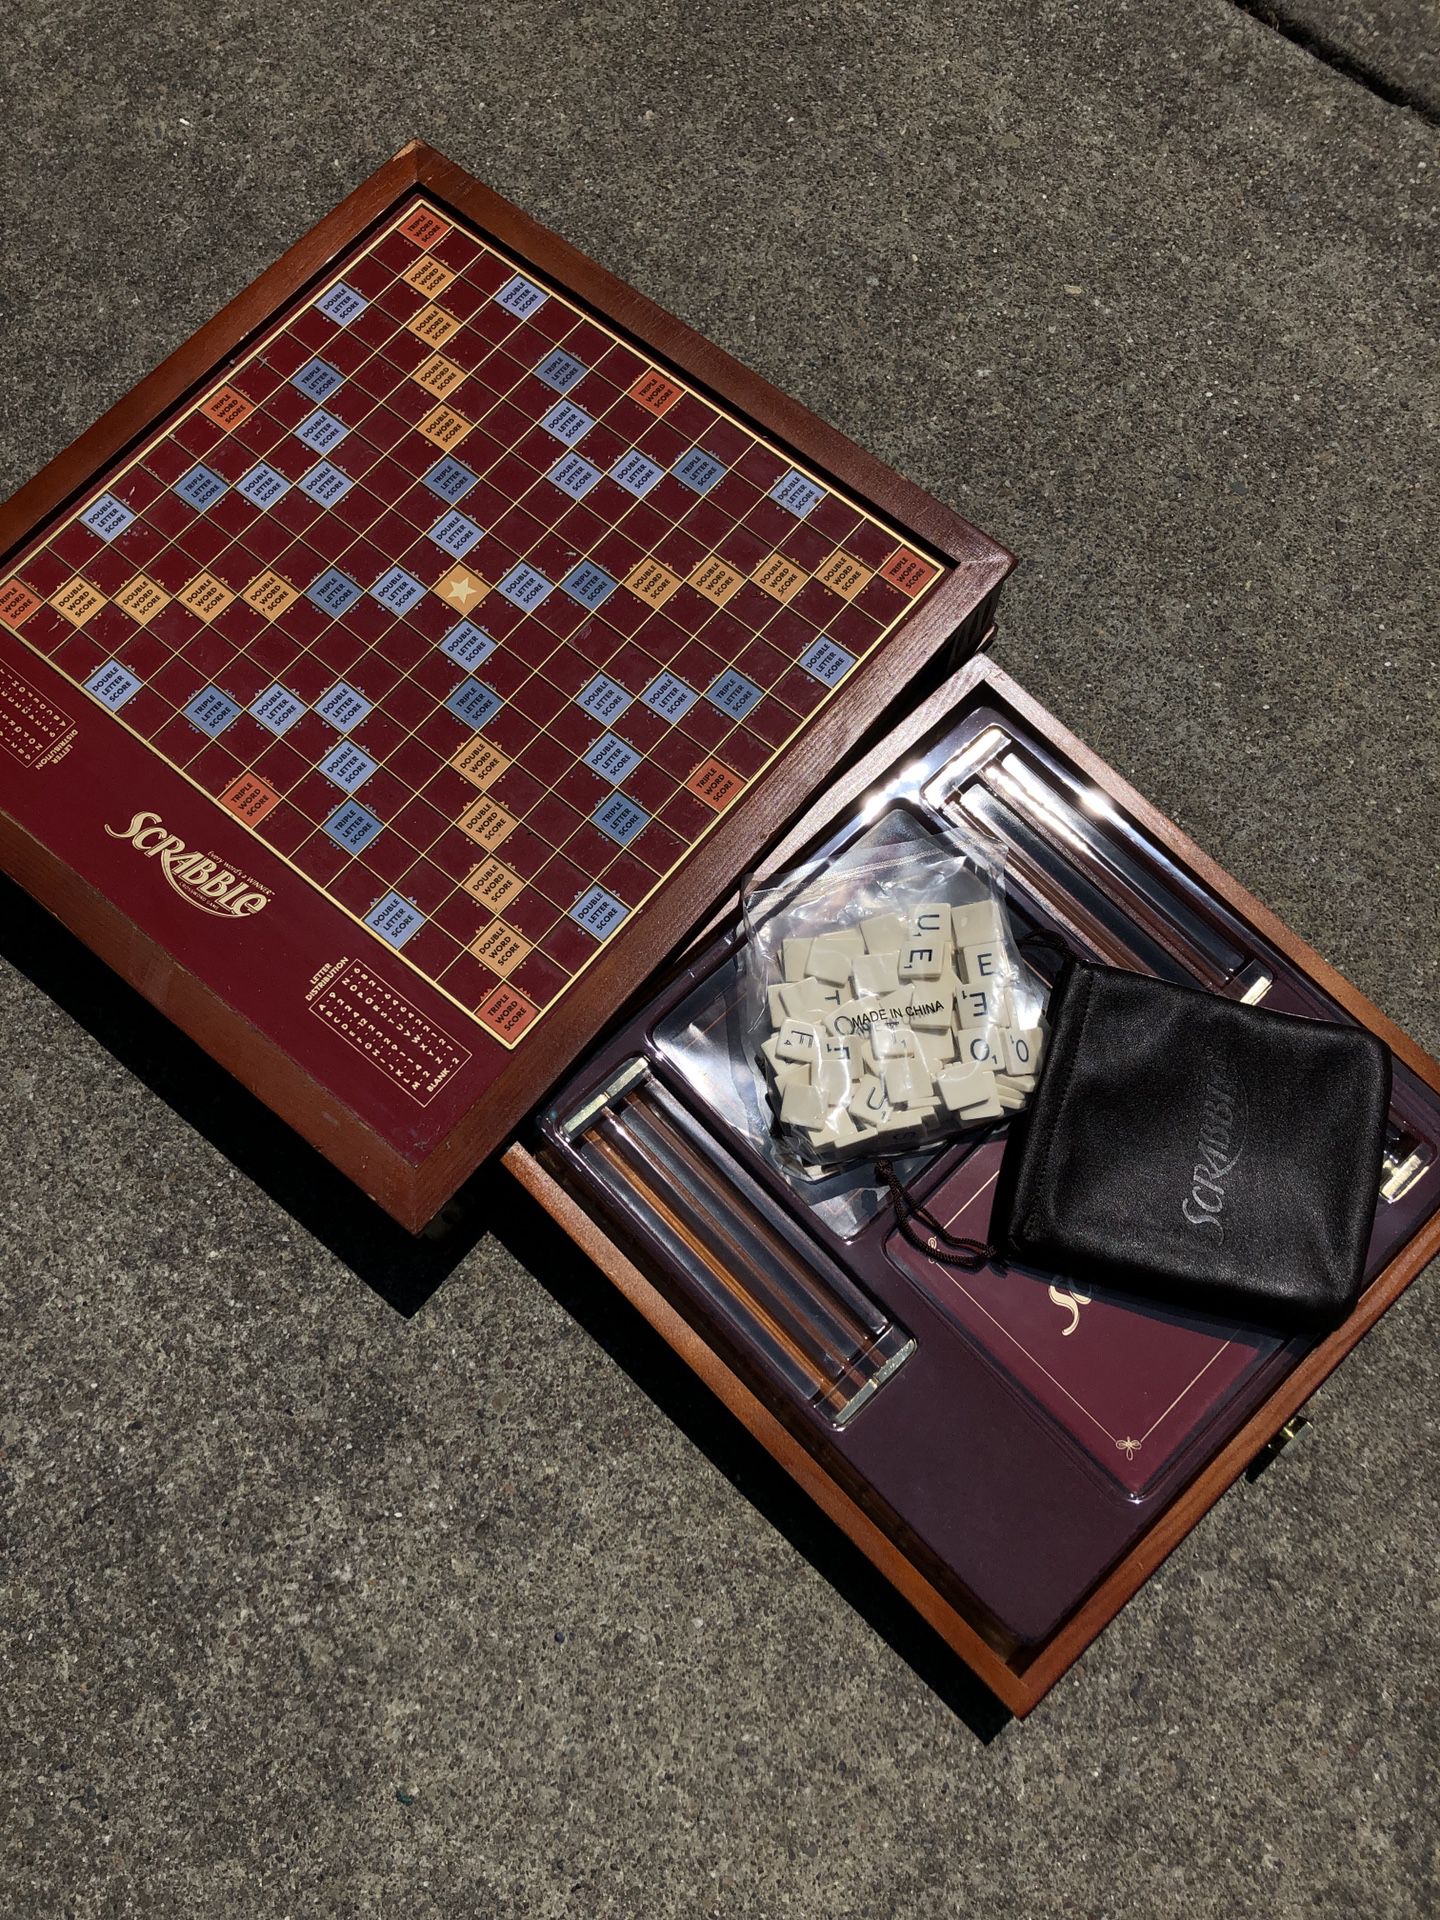 Scrabble board game set